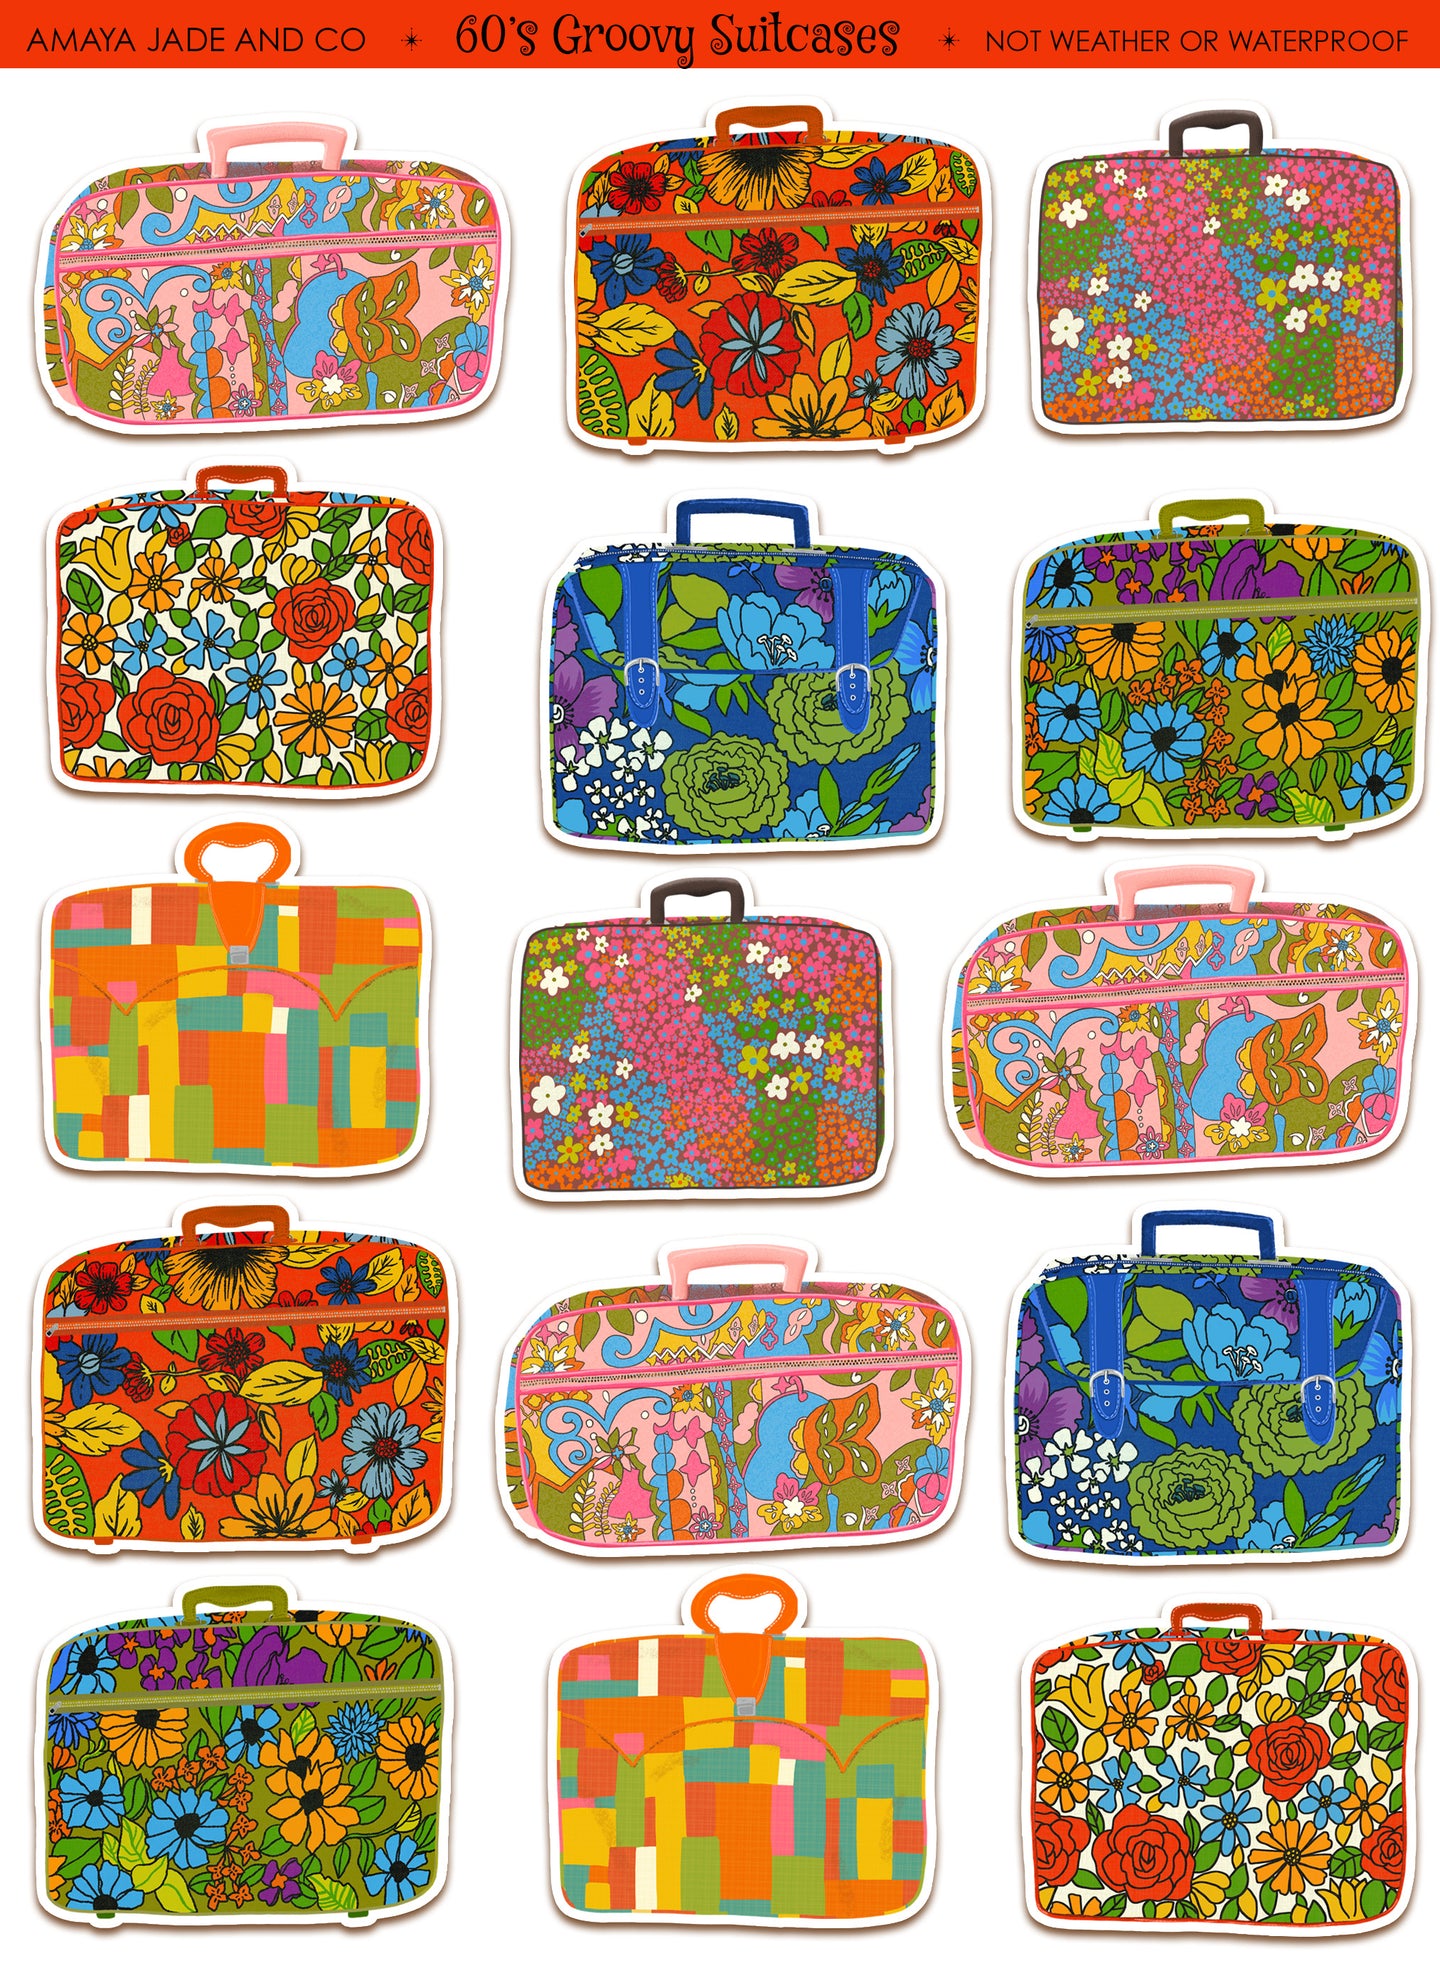 60's Groovy Suitcases Art Sticker Set